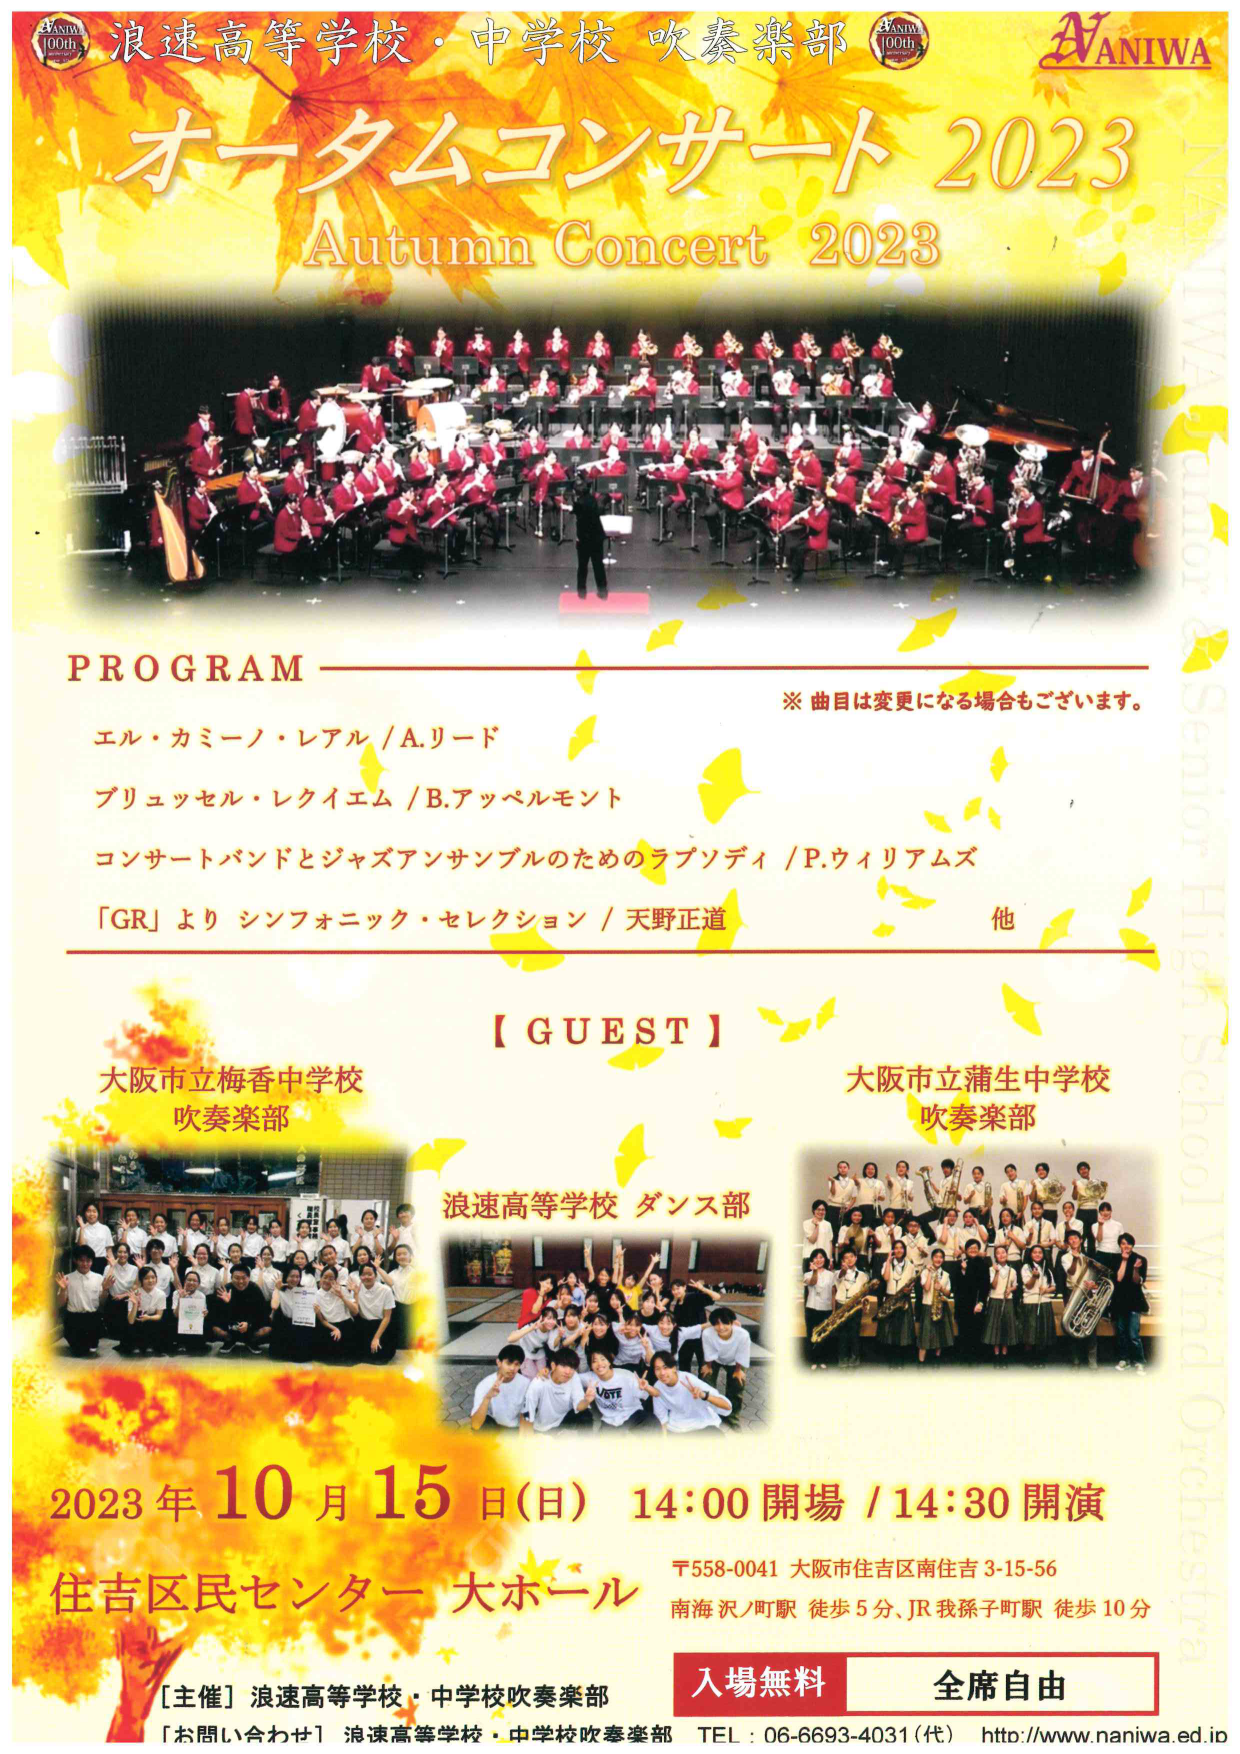 【学校園ニュース】浪速高等学校・中学校吹奏楽部 オータムコンサート2023